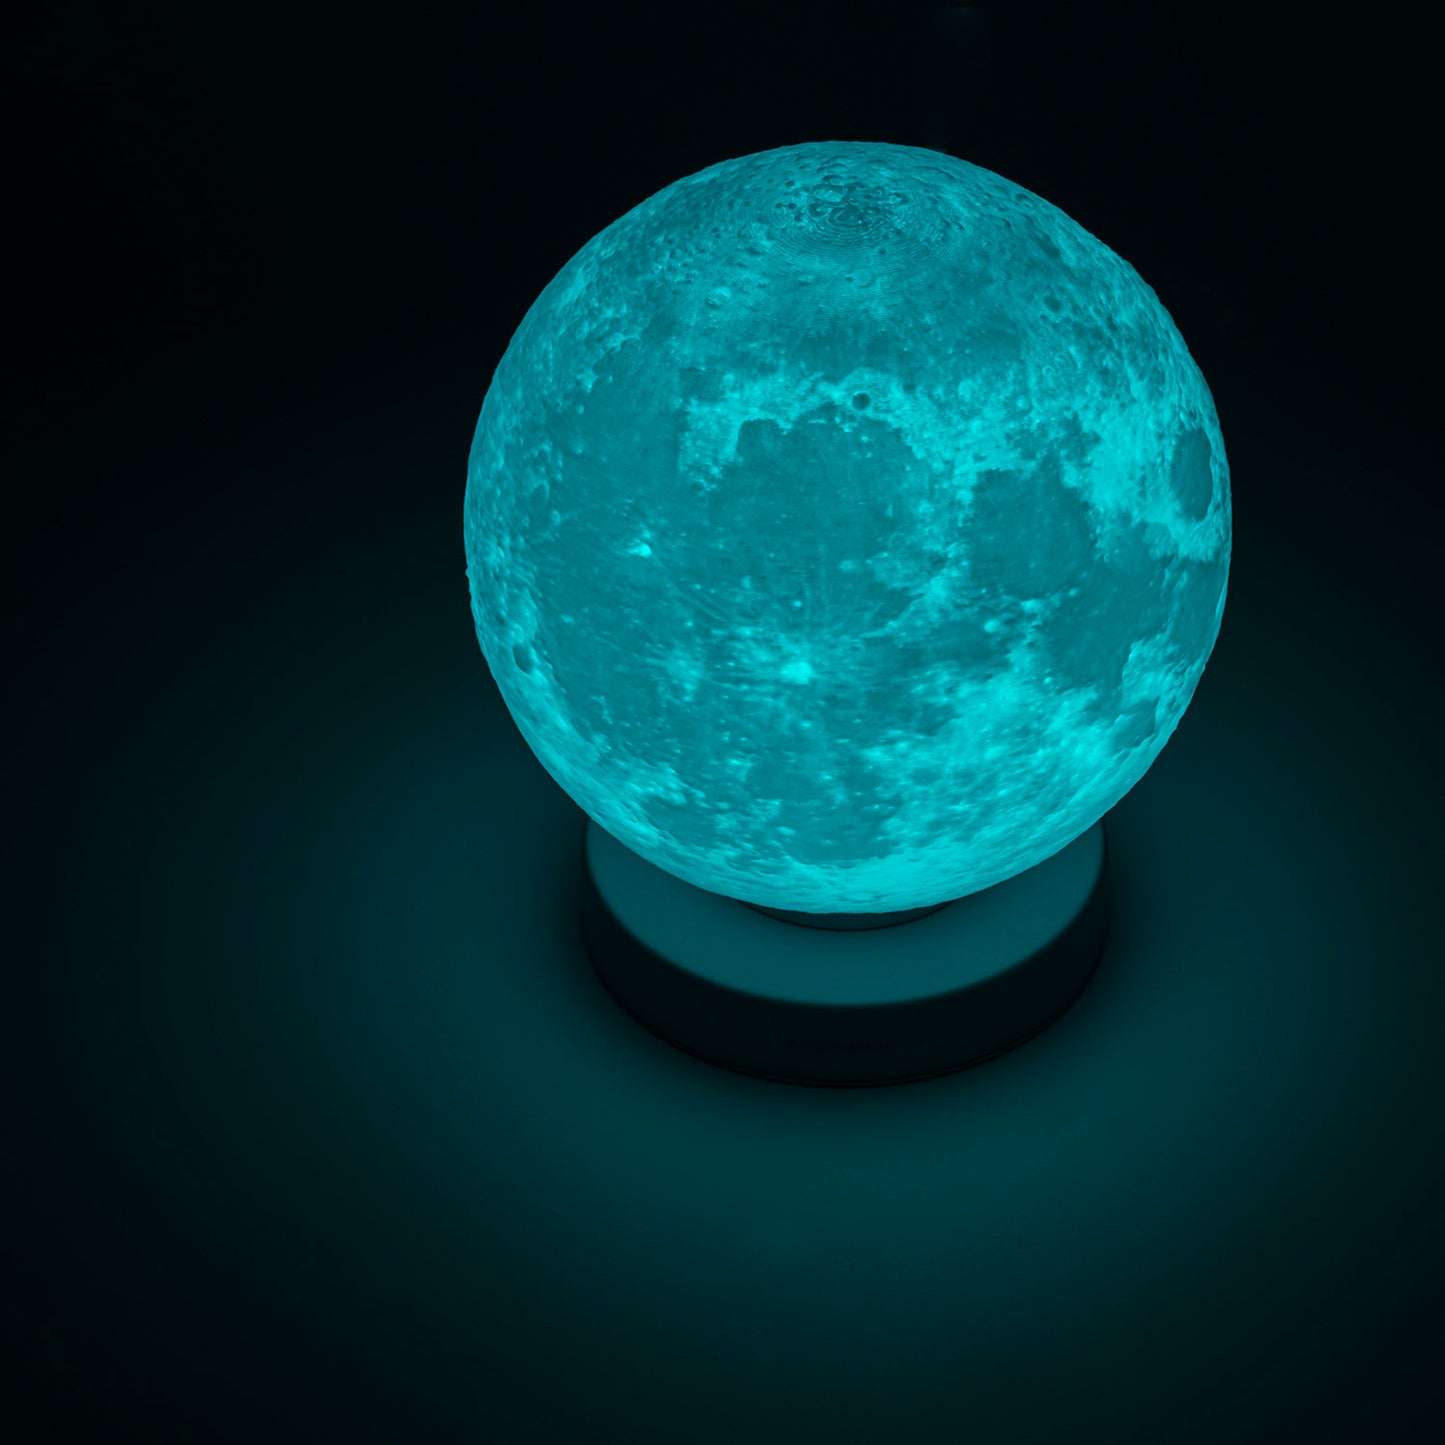 Moon IoT智能月球燈 -- IL2S